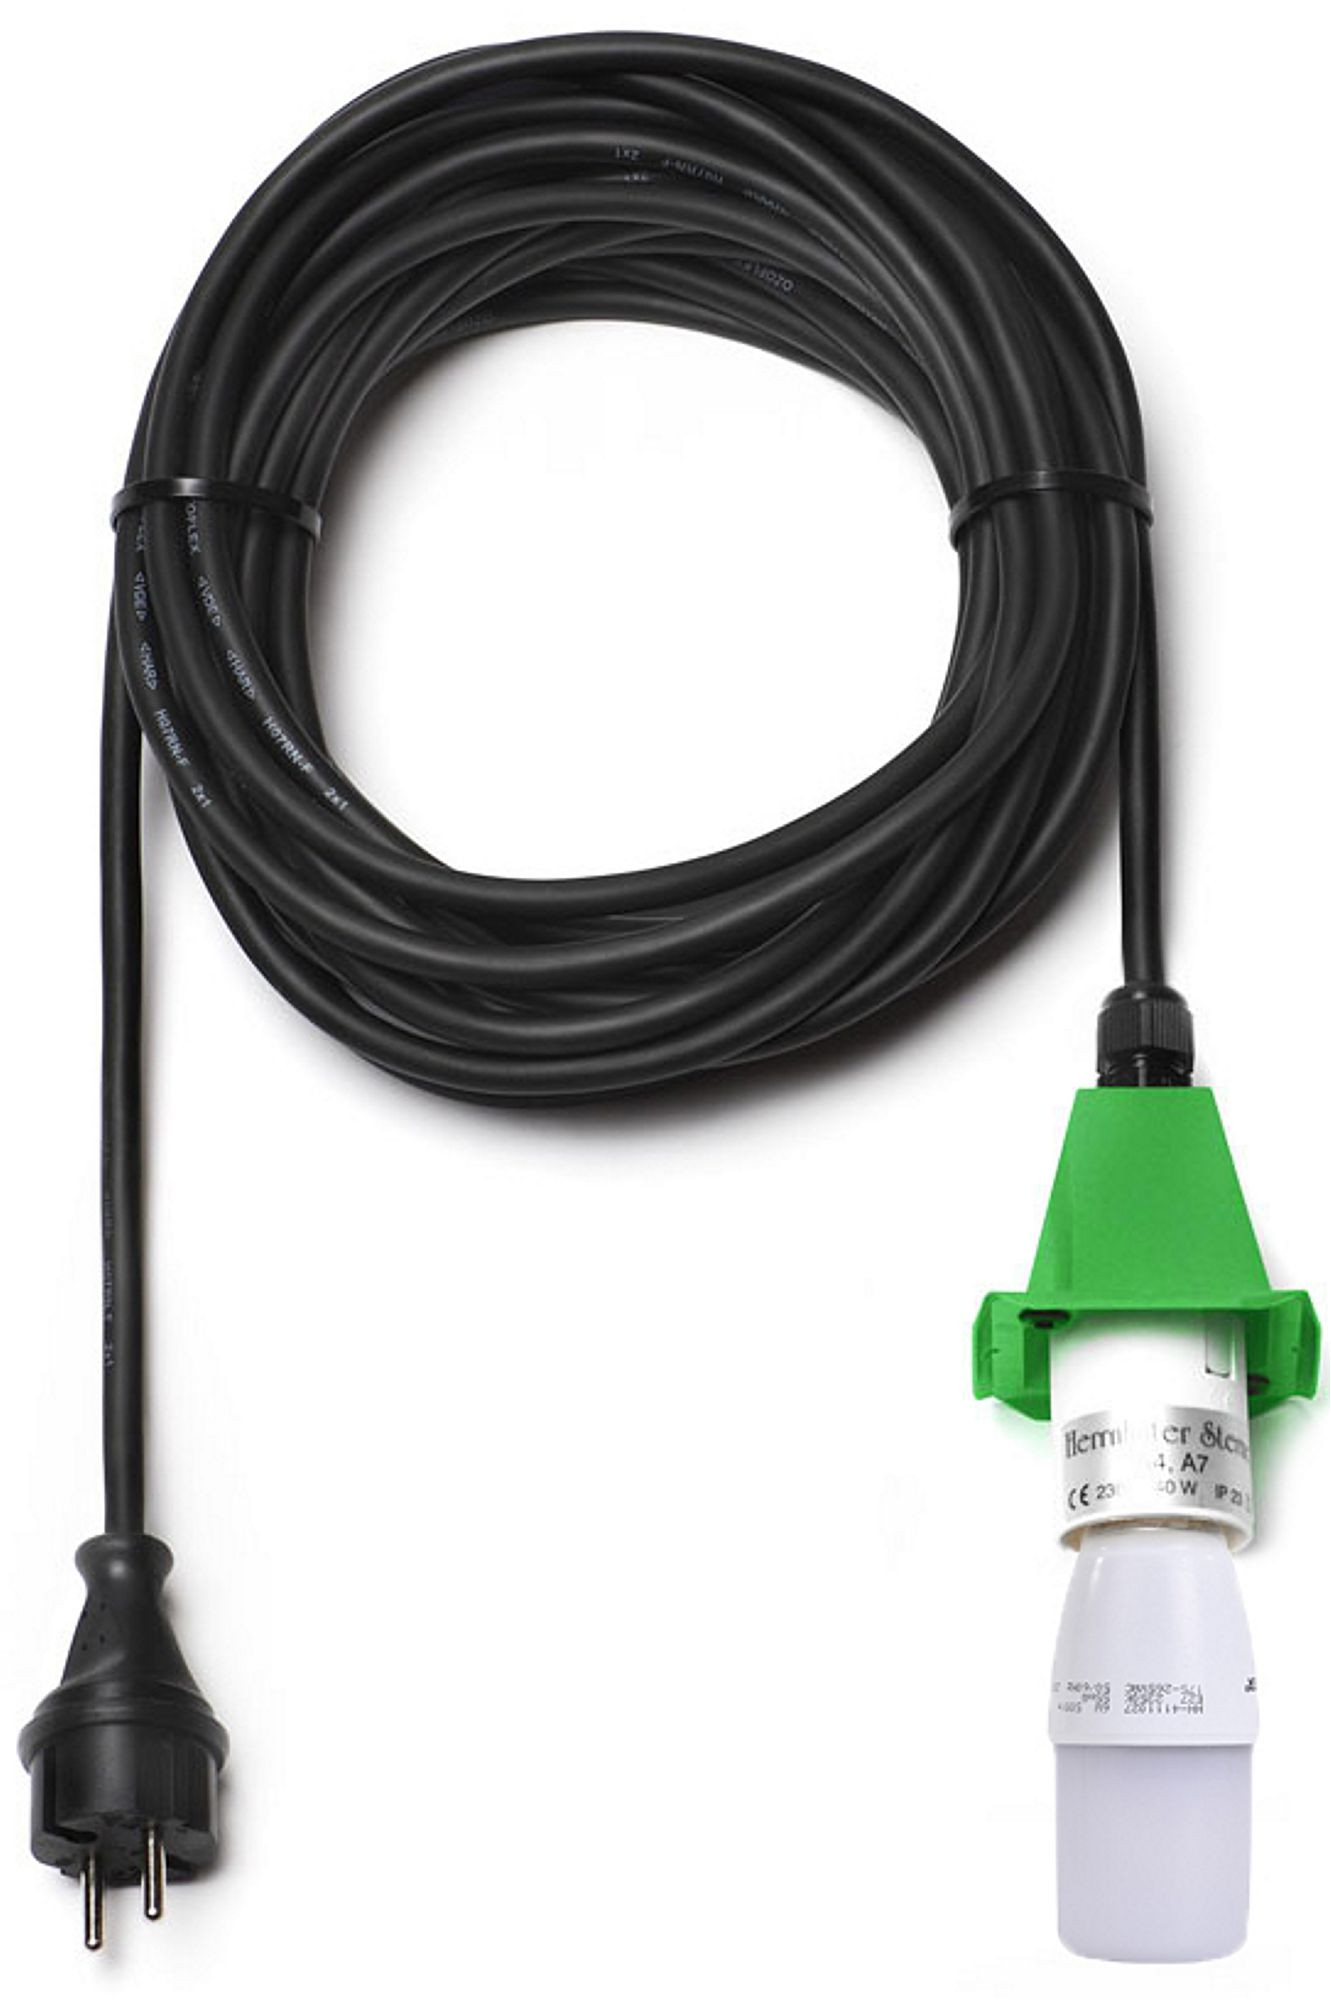 Herrnhuter Kabel für A4/A7 - 10m Deckel grün LED